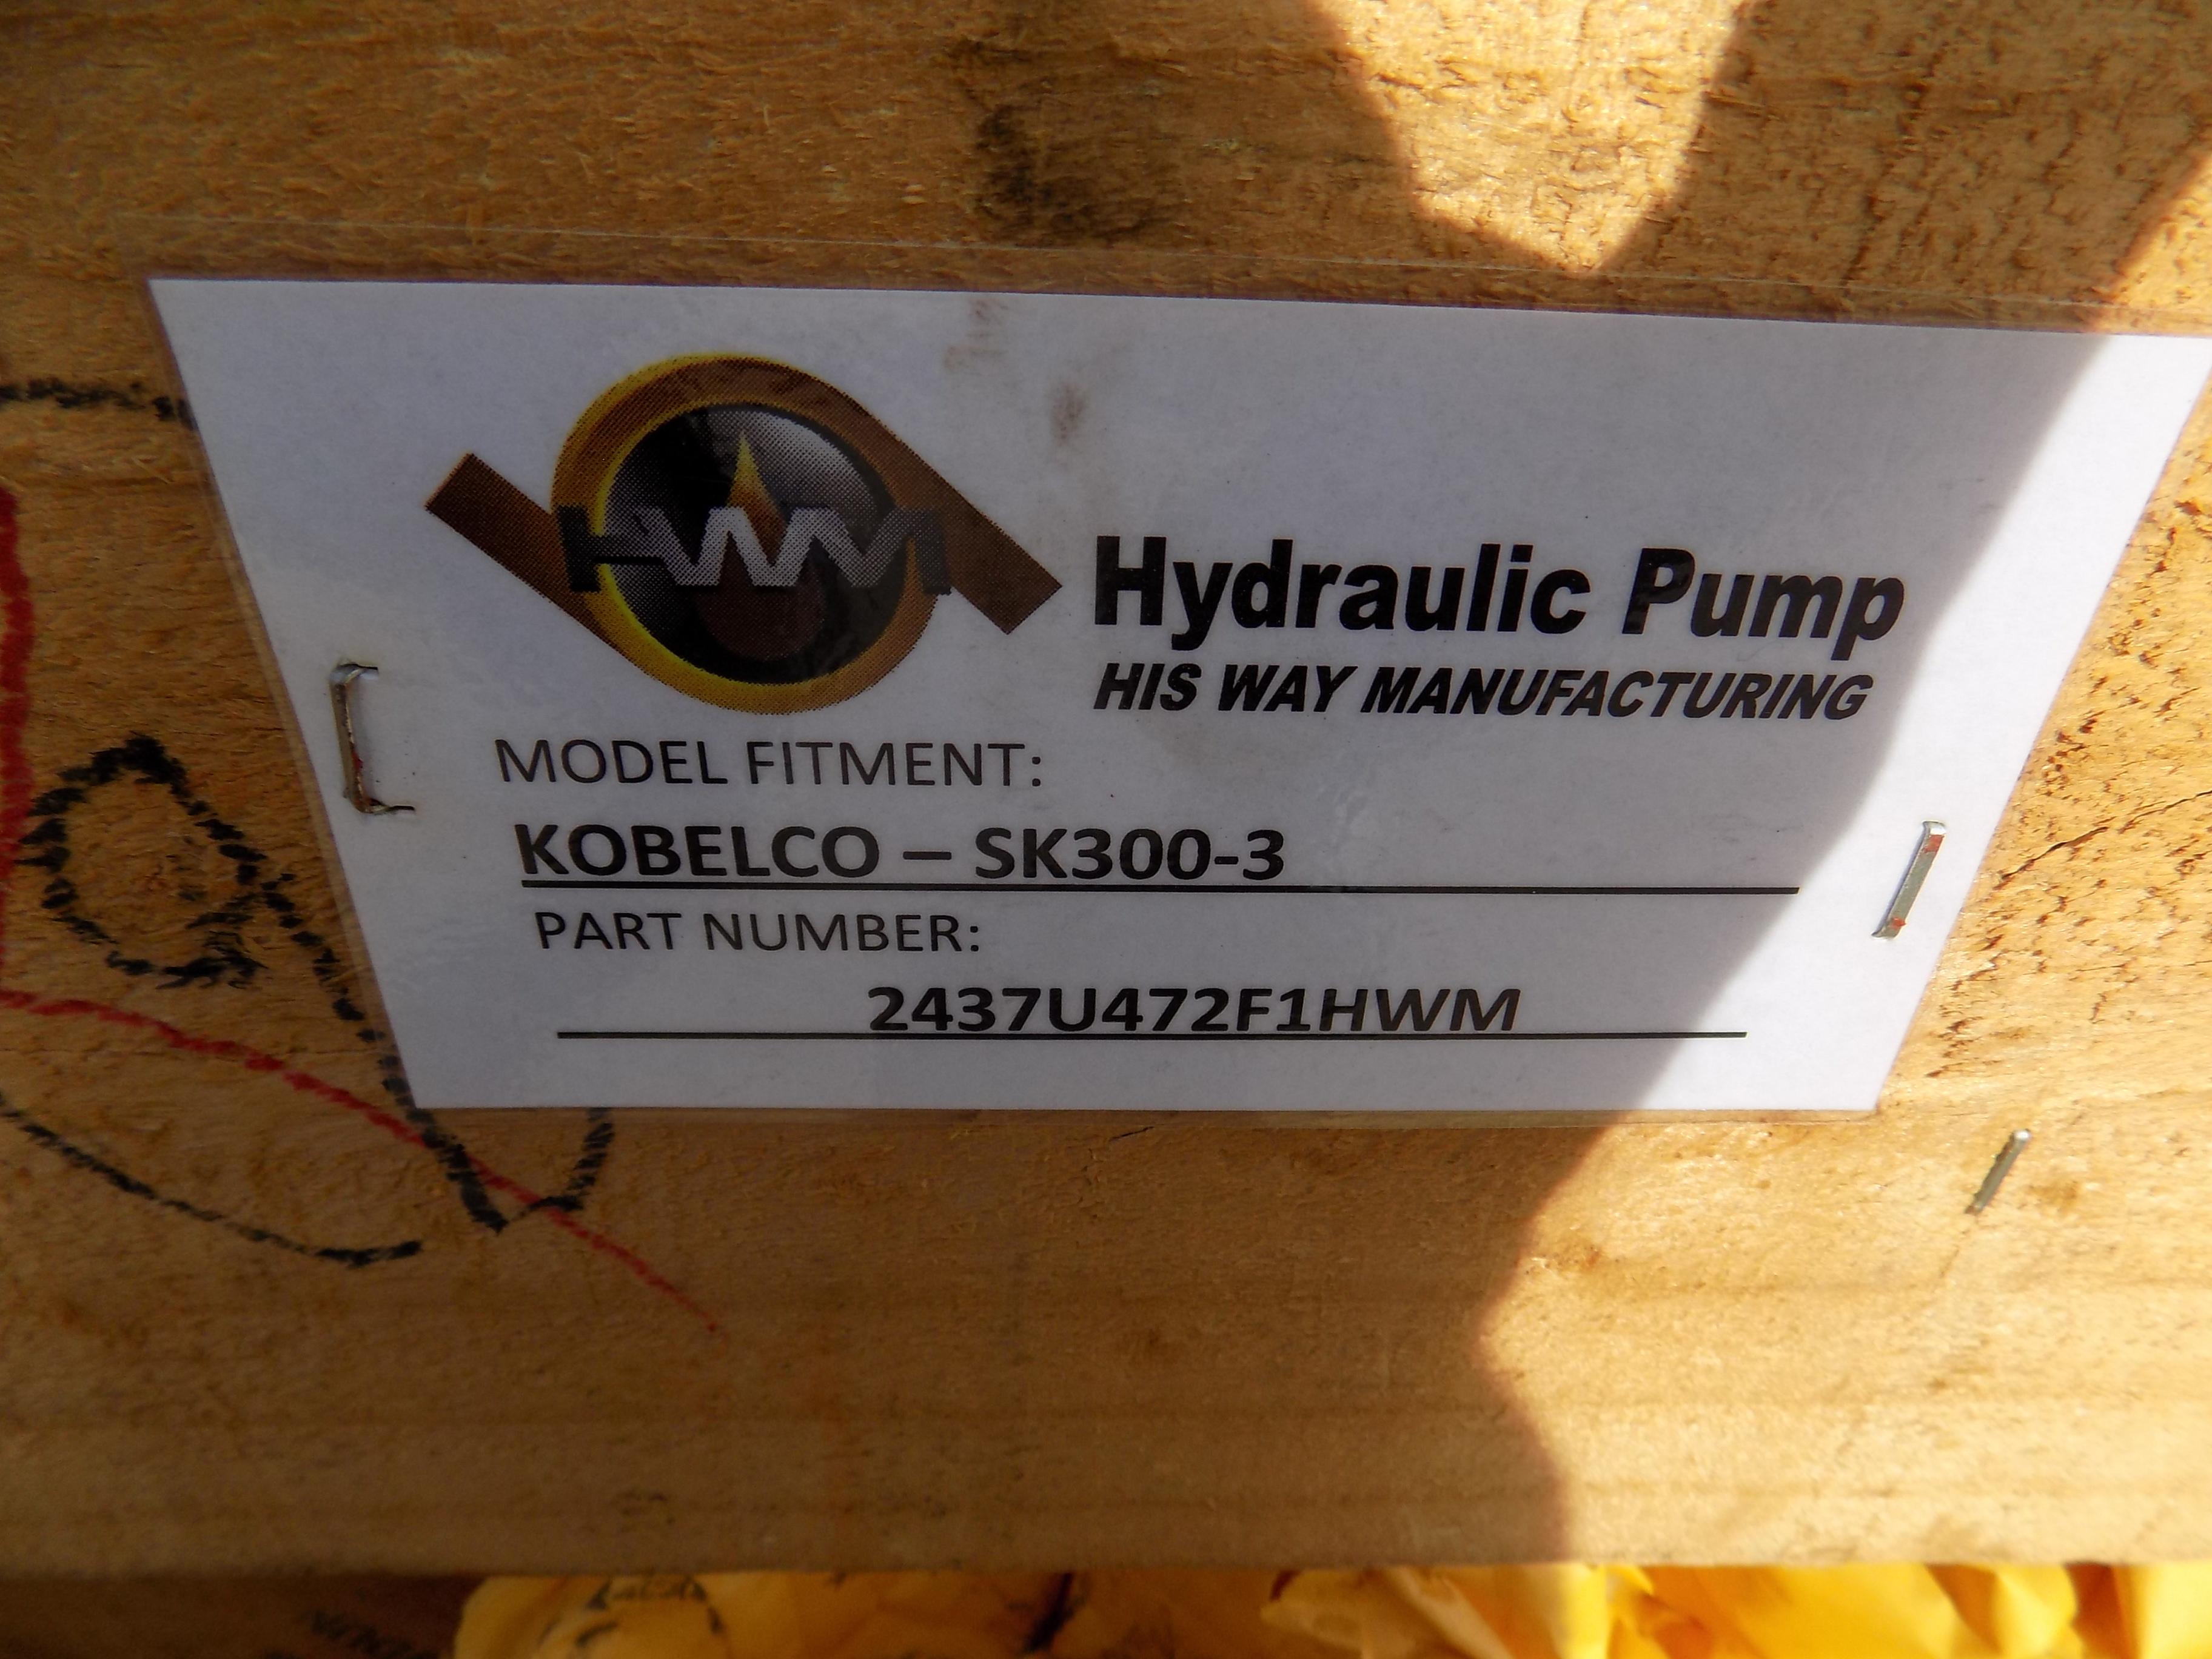 His Way Manufacturing Hyrdaulic Pump Fitment Model Kobelco-SK300-3